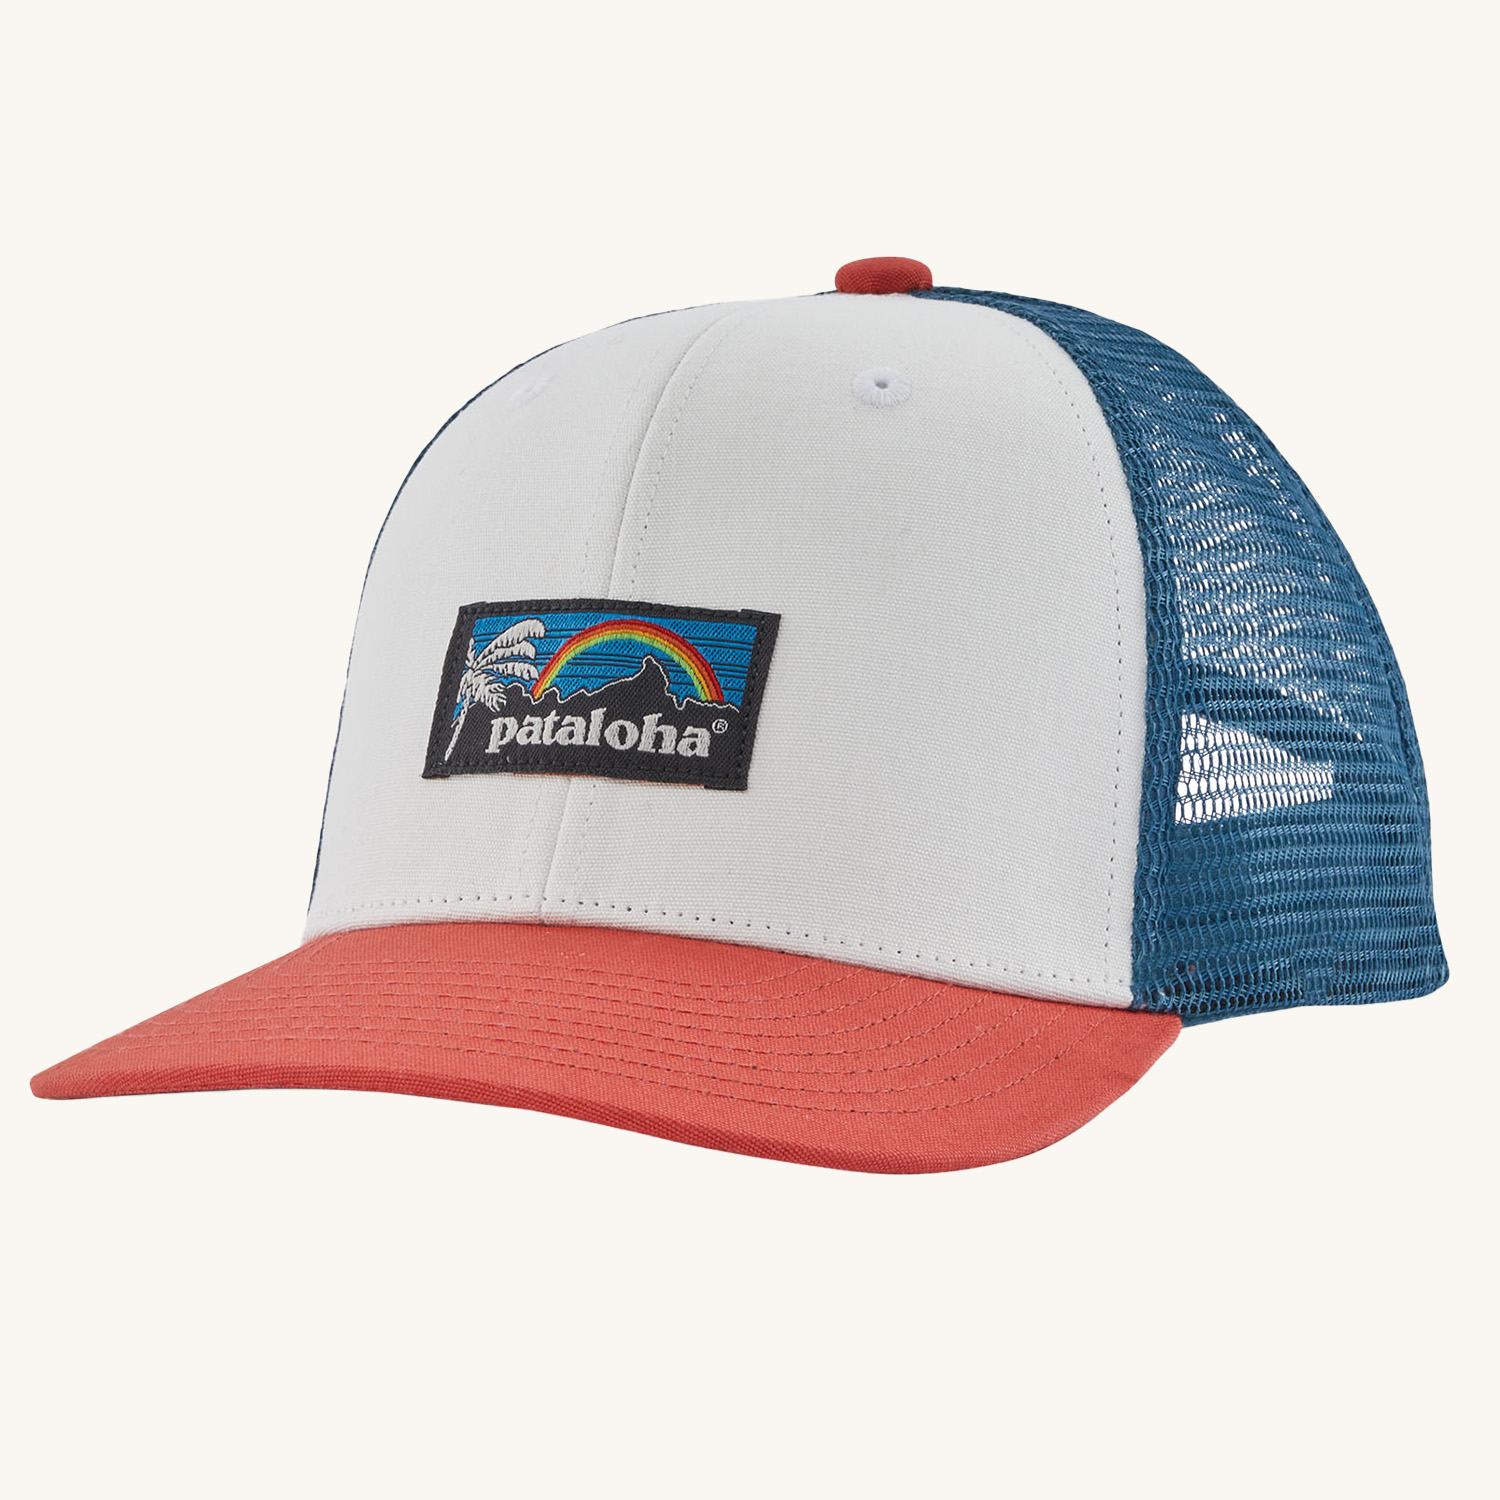 Patagonia Kid's Trucker Hat Baseball Cap - Patalokahi Label: Birch White